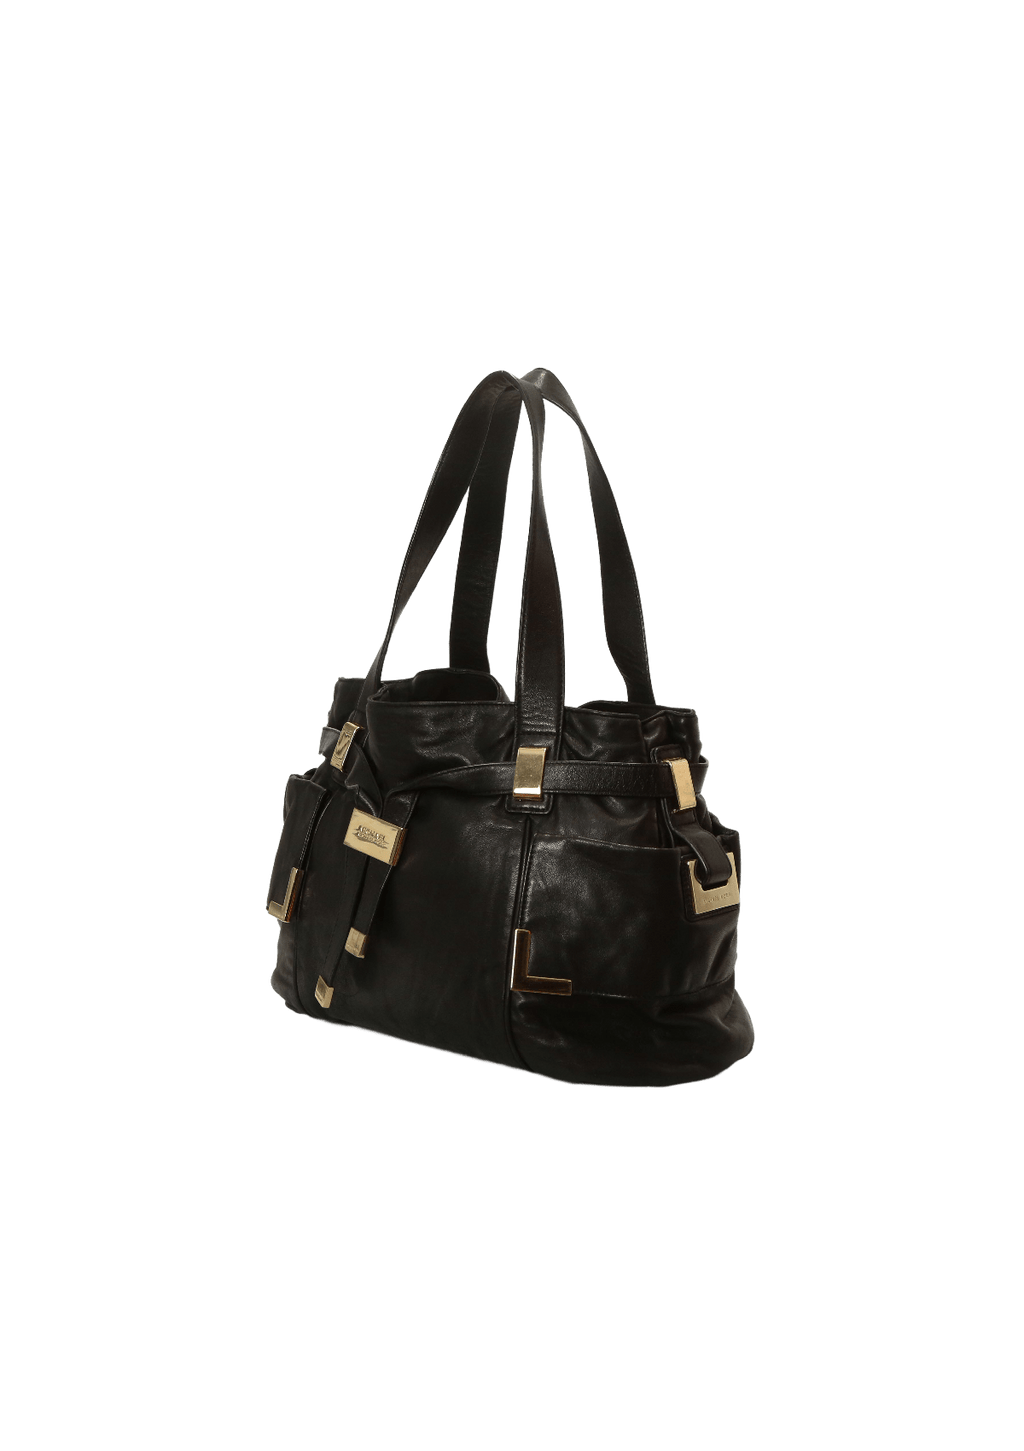 Bolsa Michael Kors Leather Shoulder Bag Preta Original – Gringa